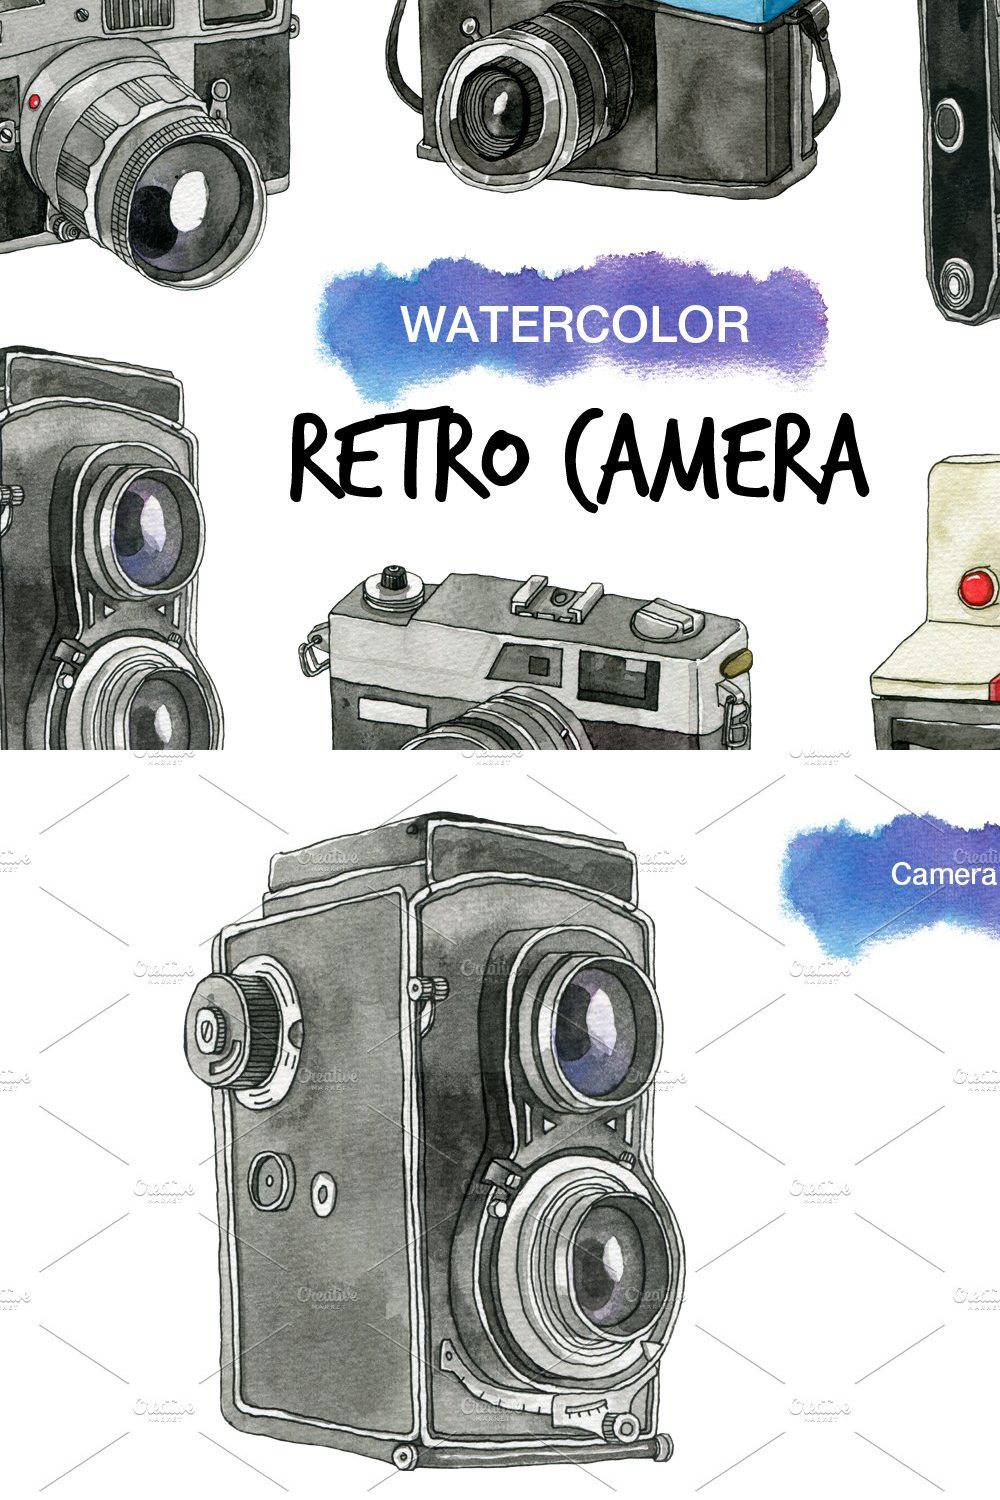 6 Watercolor Retro Camera pinterest preview image.